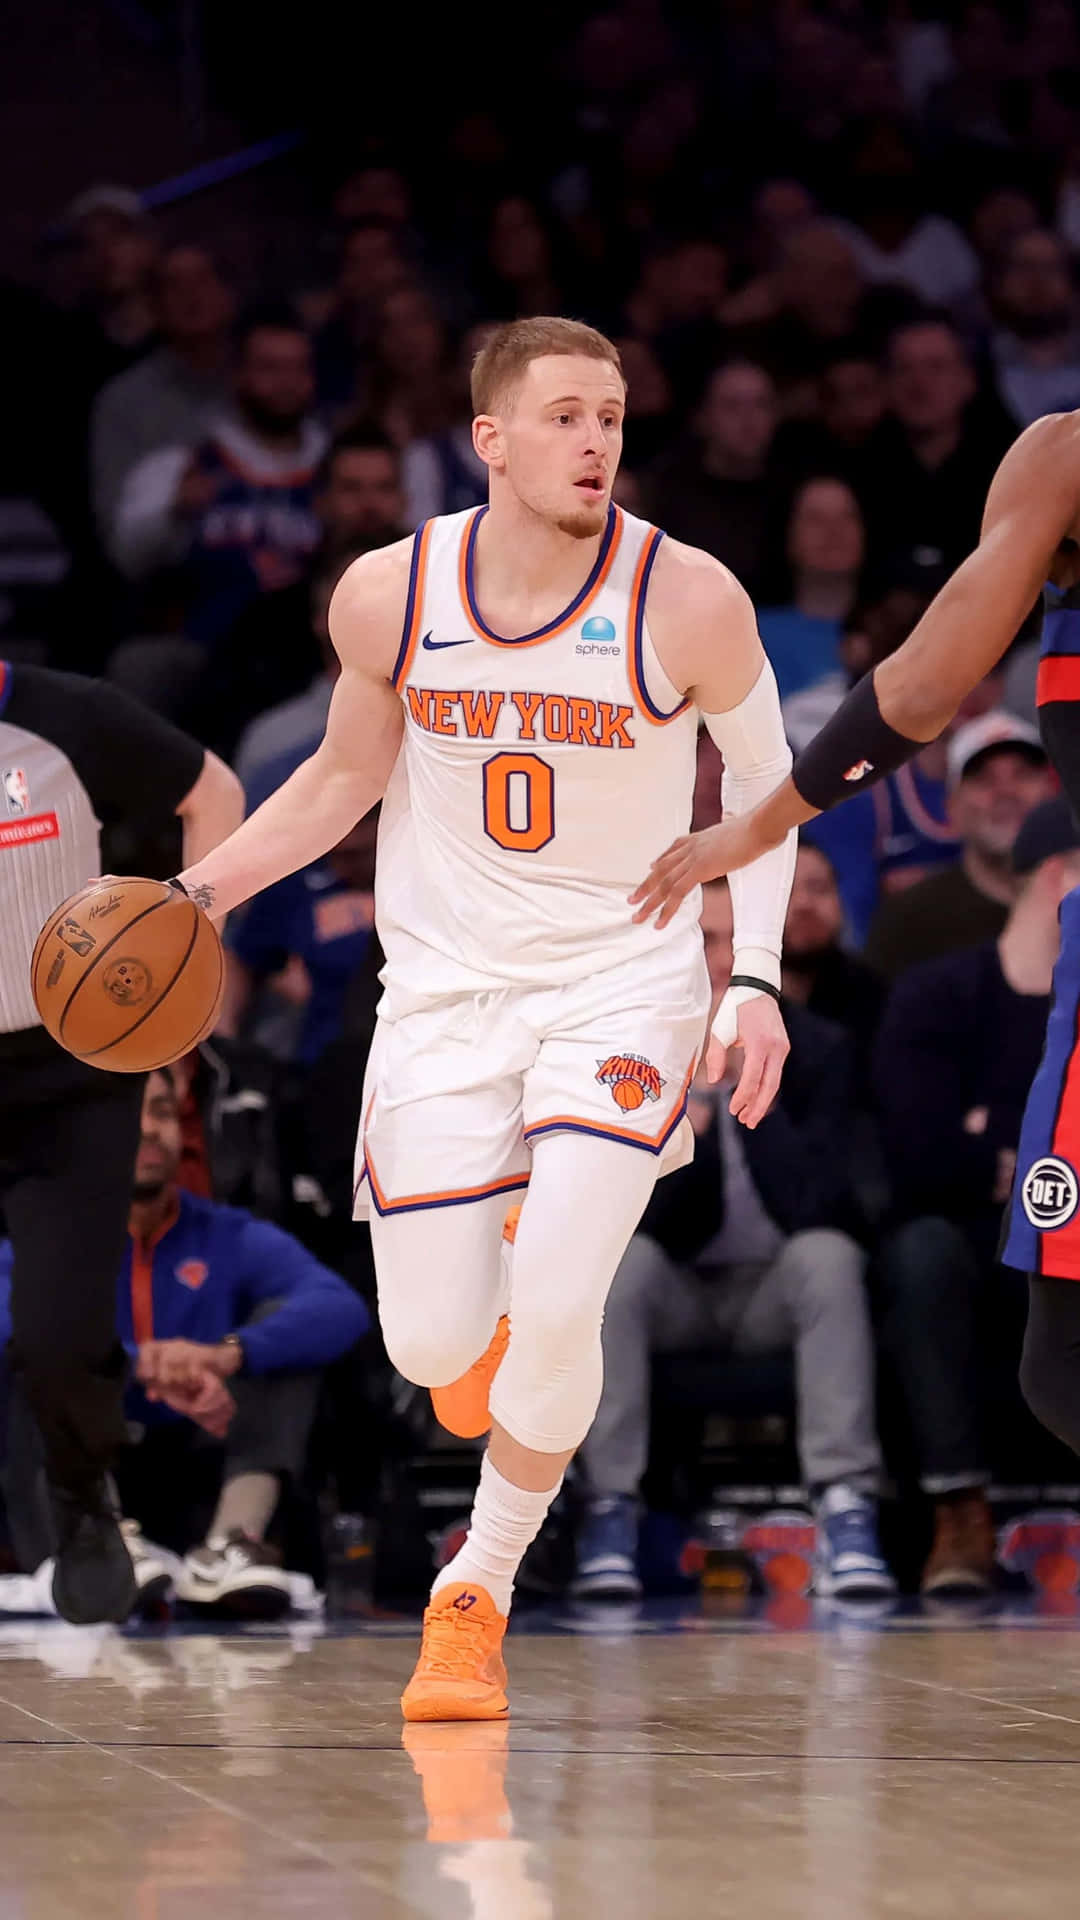 New York Knicks Player Dribbling Basketball Wallpaper